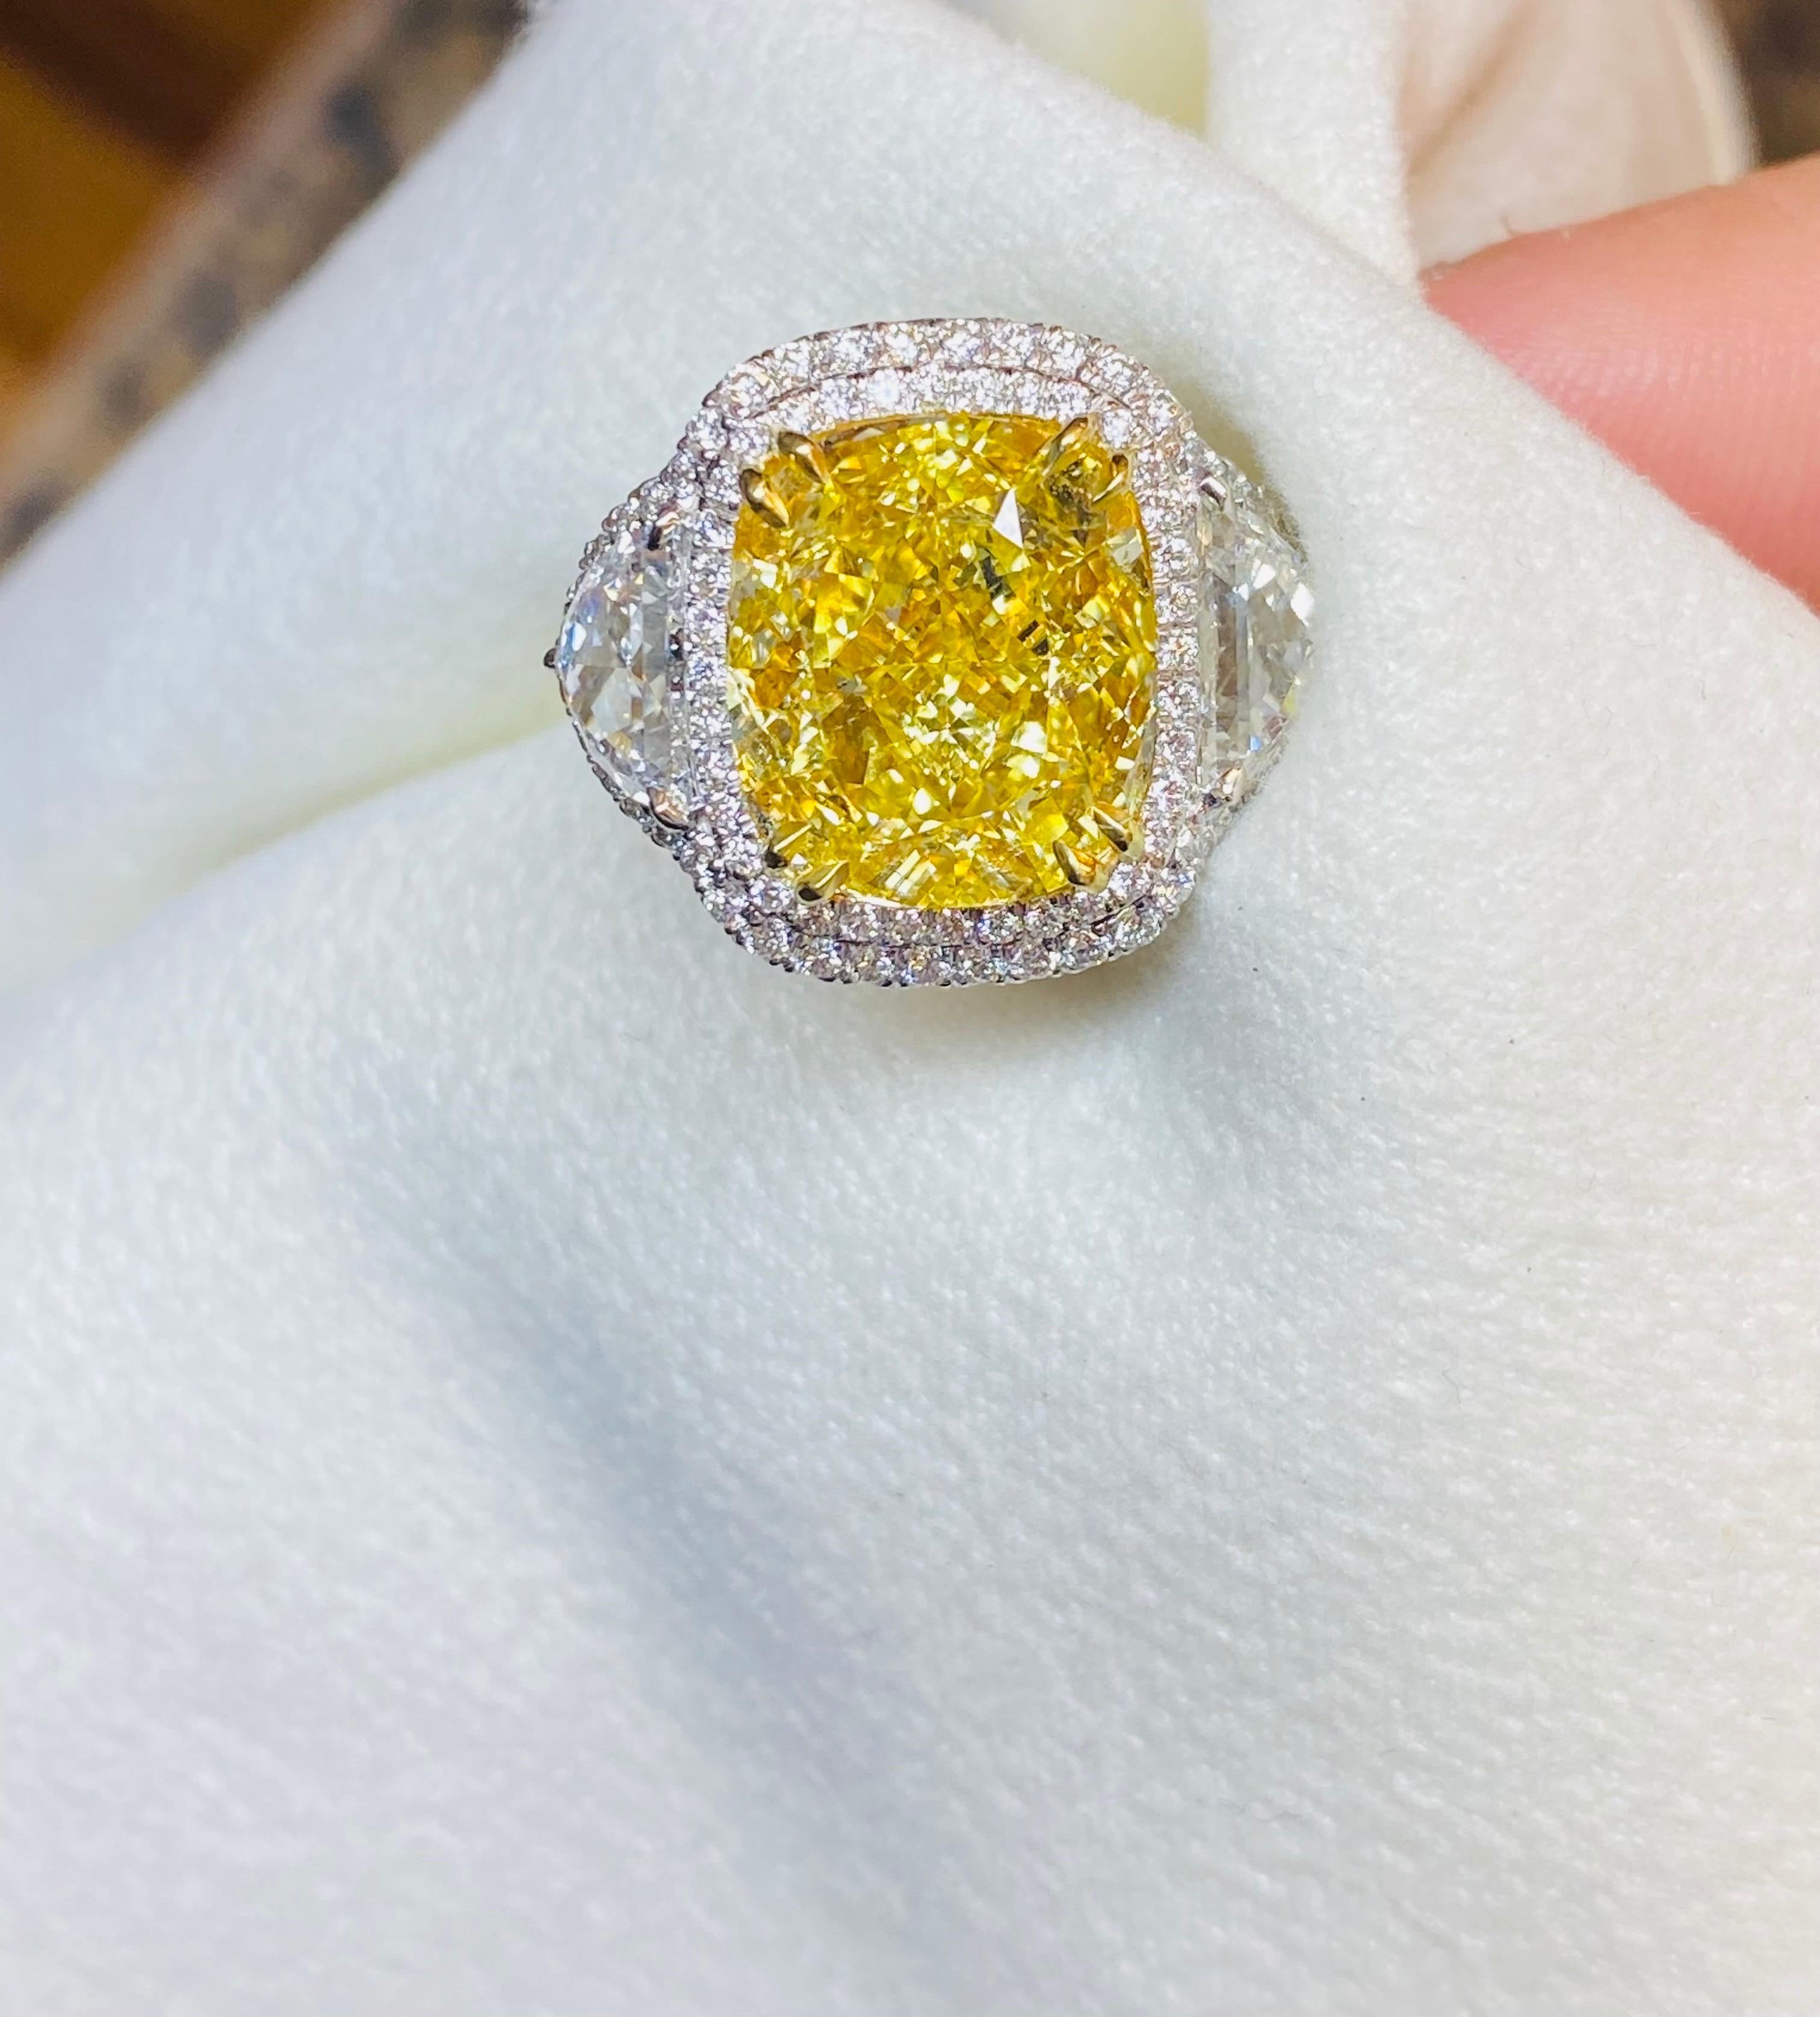 Emilio Jewelry GIA Certified 12.67 Carat Fancy Intense Yellow Diamond Ring For Sale 6